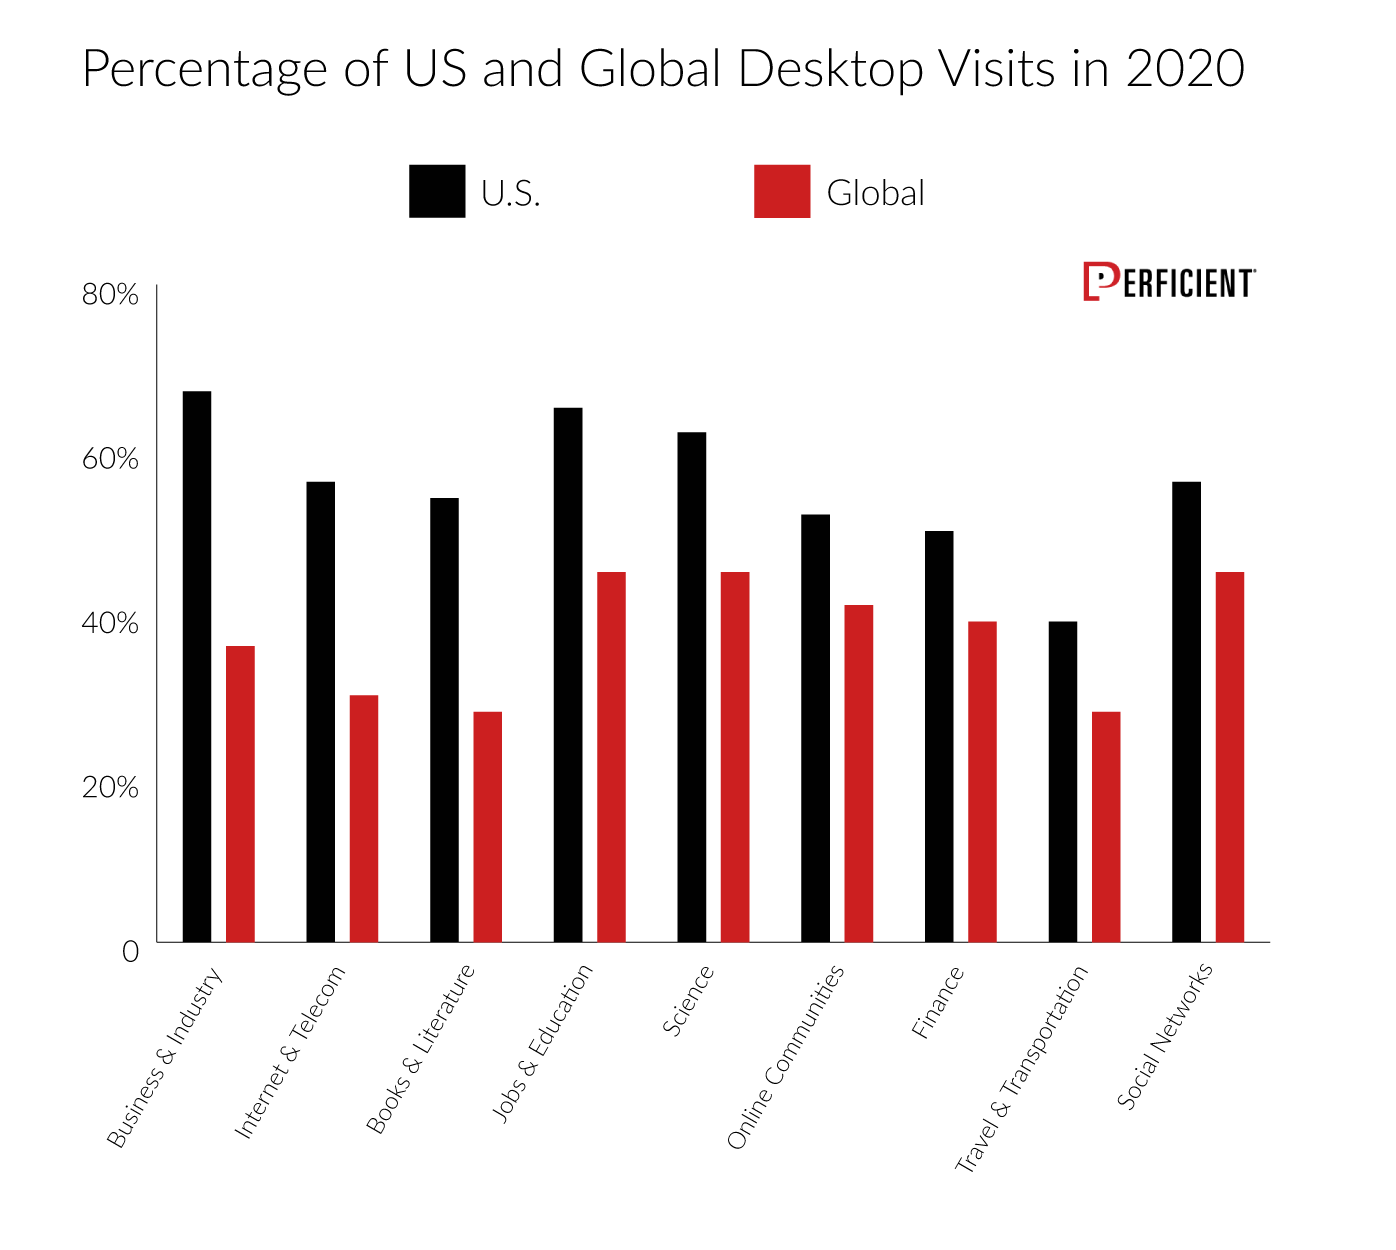 Percentage of Desktop Visits for US and Global in 2020